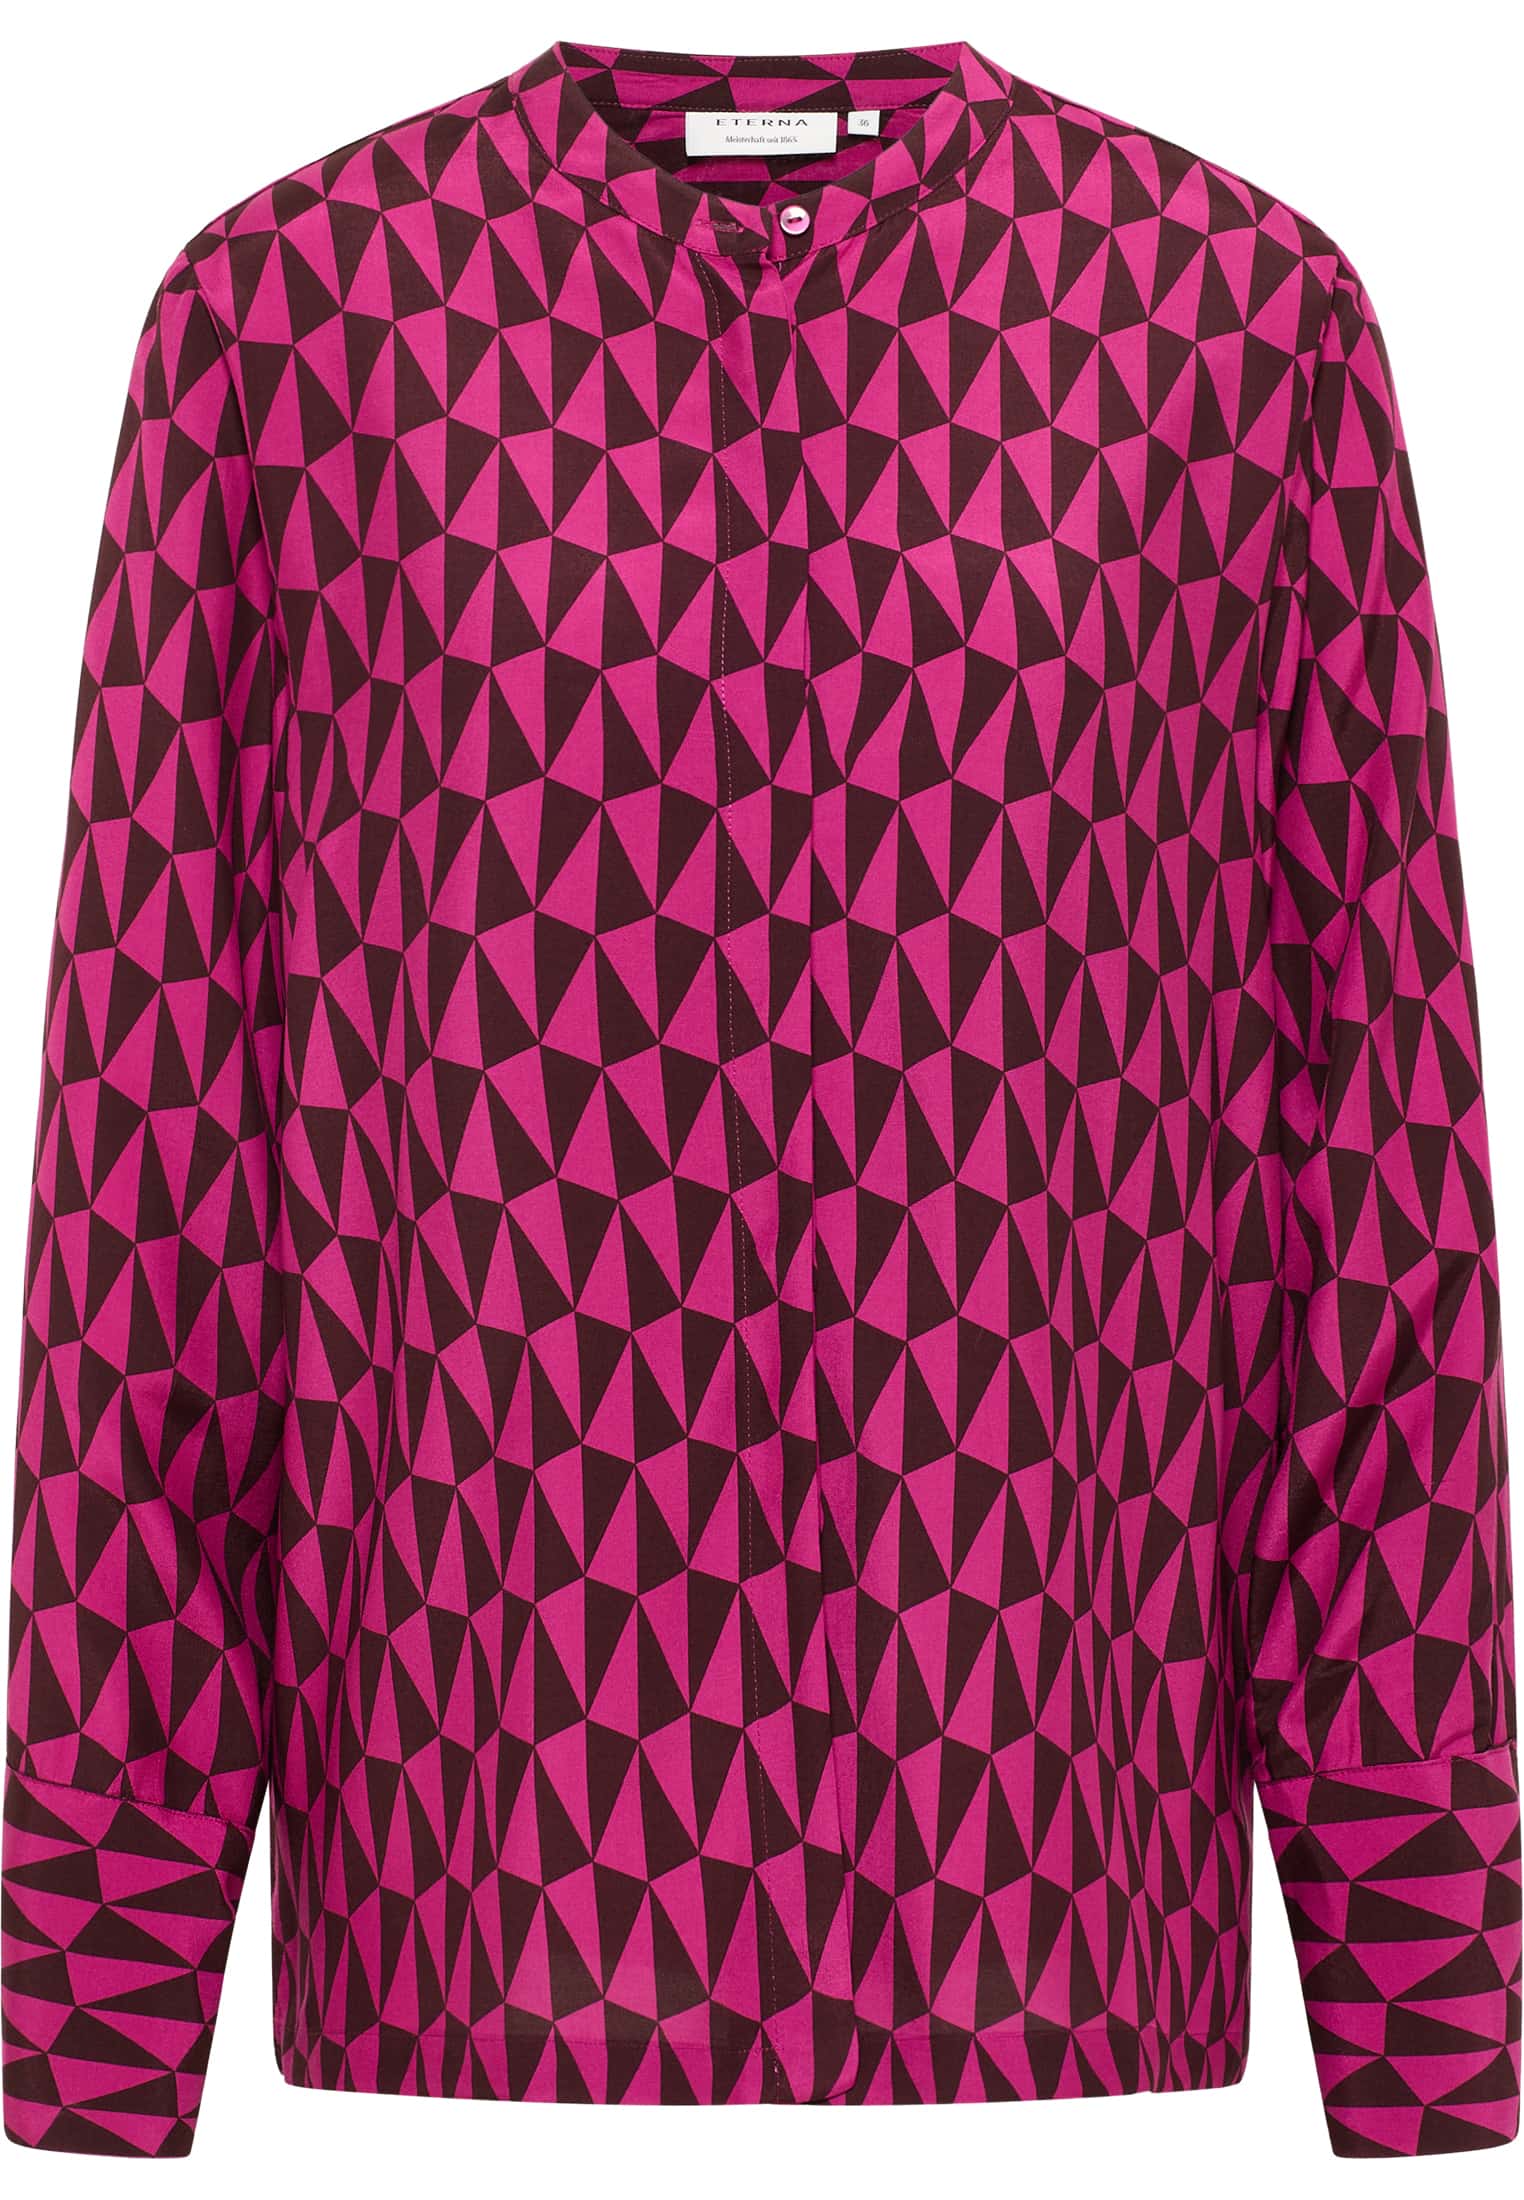 Blusenshirt in | bedruckt | 2BL04250-15-21-42-1/1 | | Langarm 42 pink pink